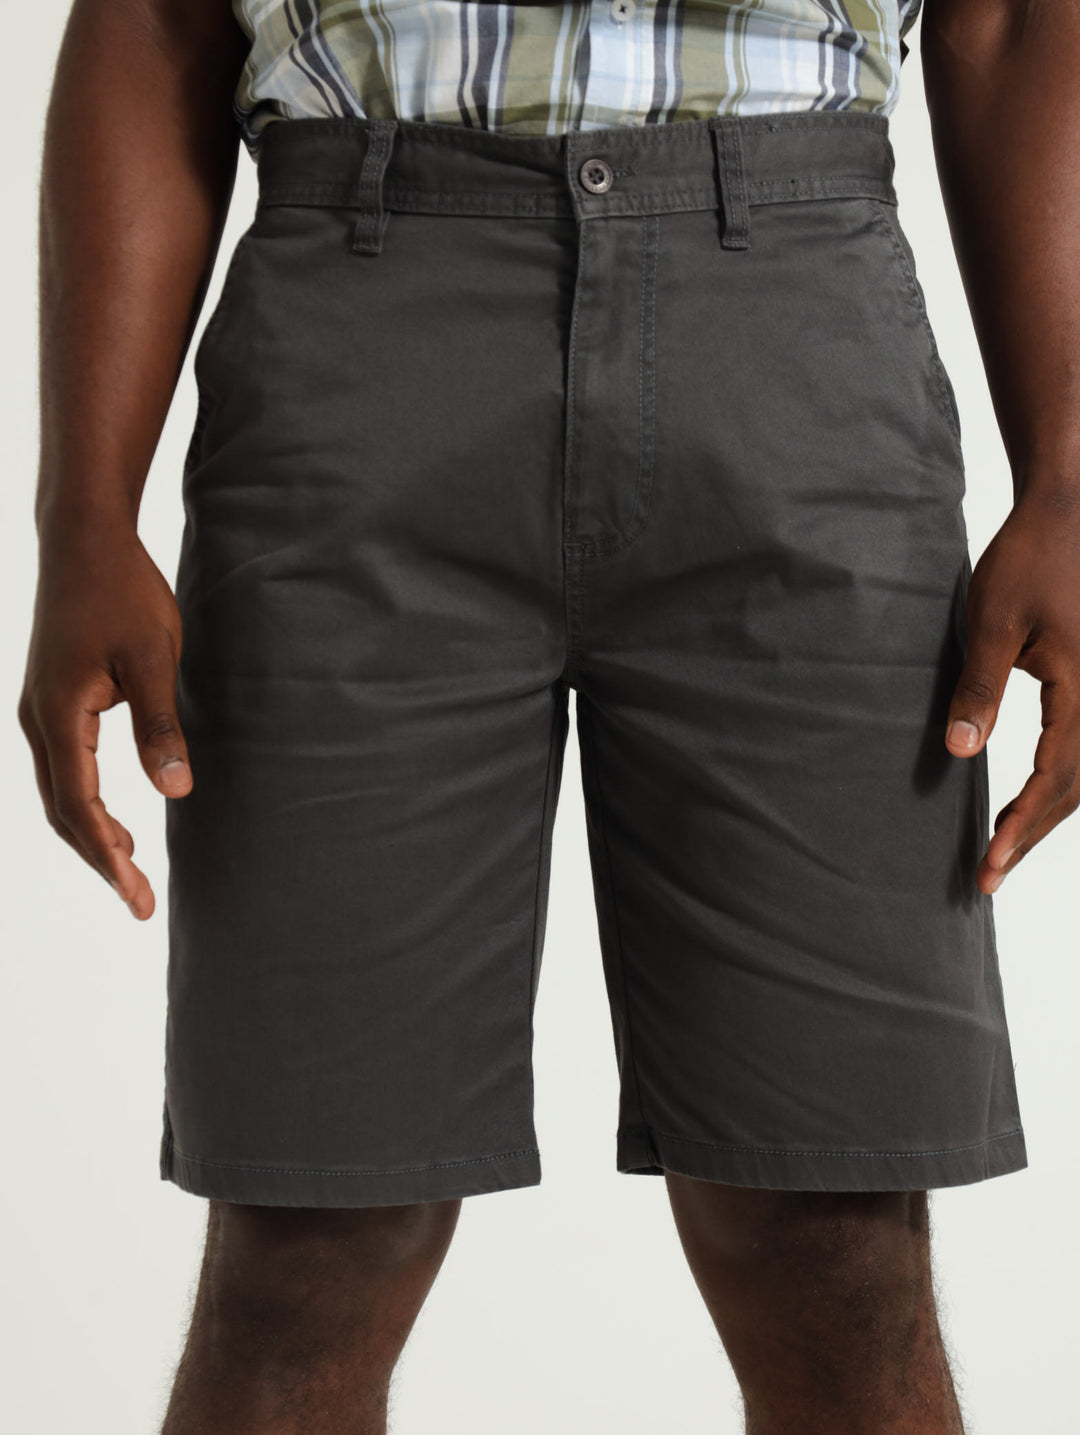 Men's Shorts – Edgars Namibia